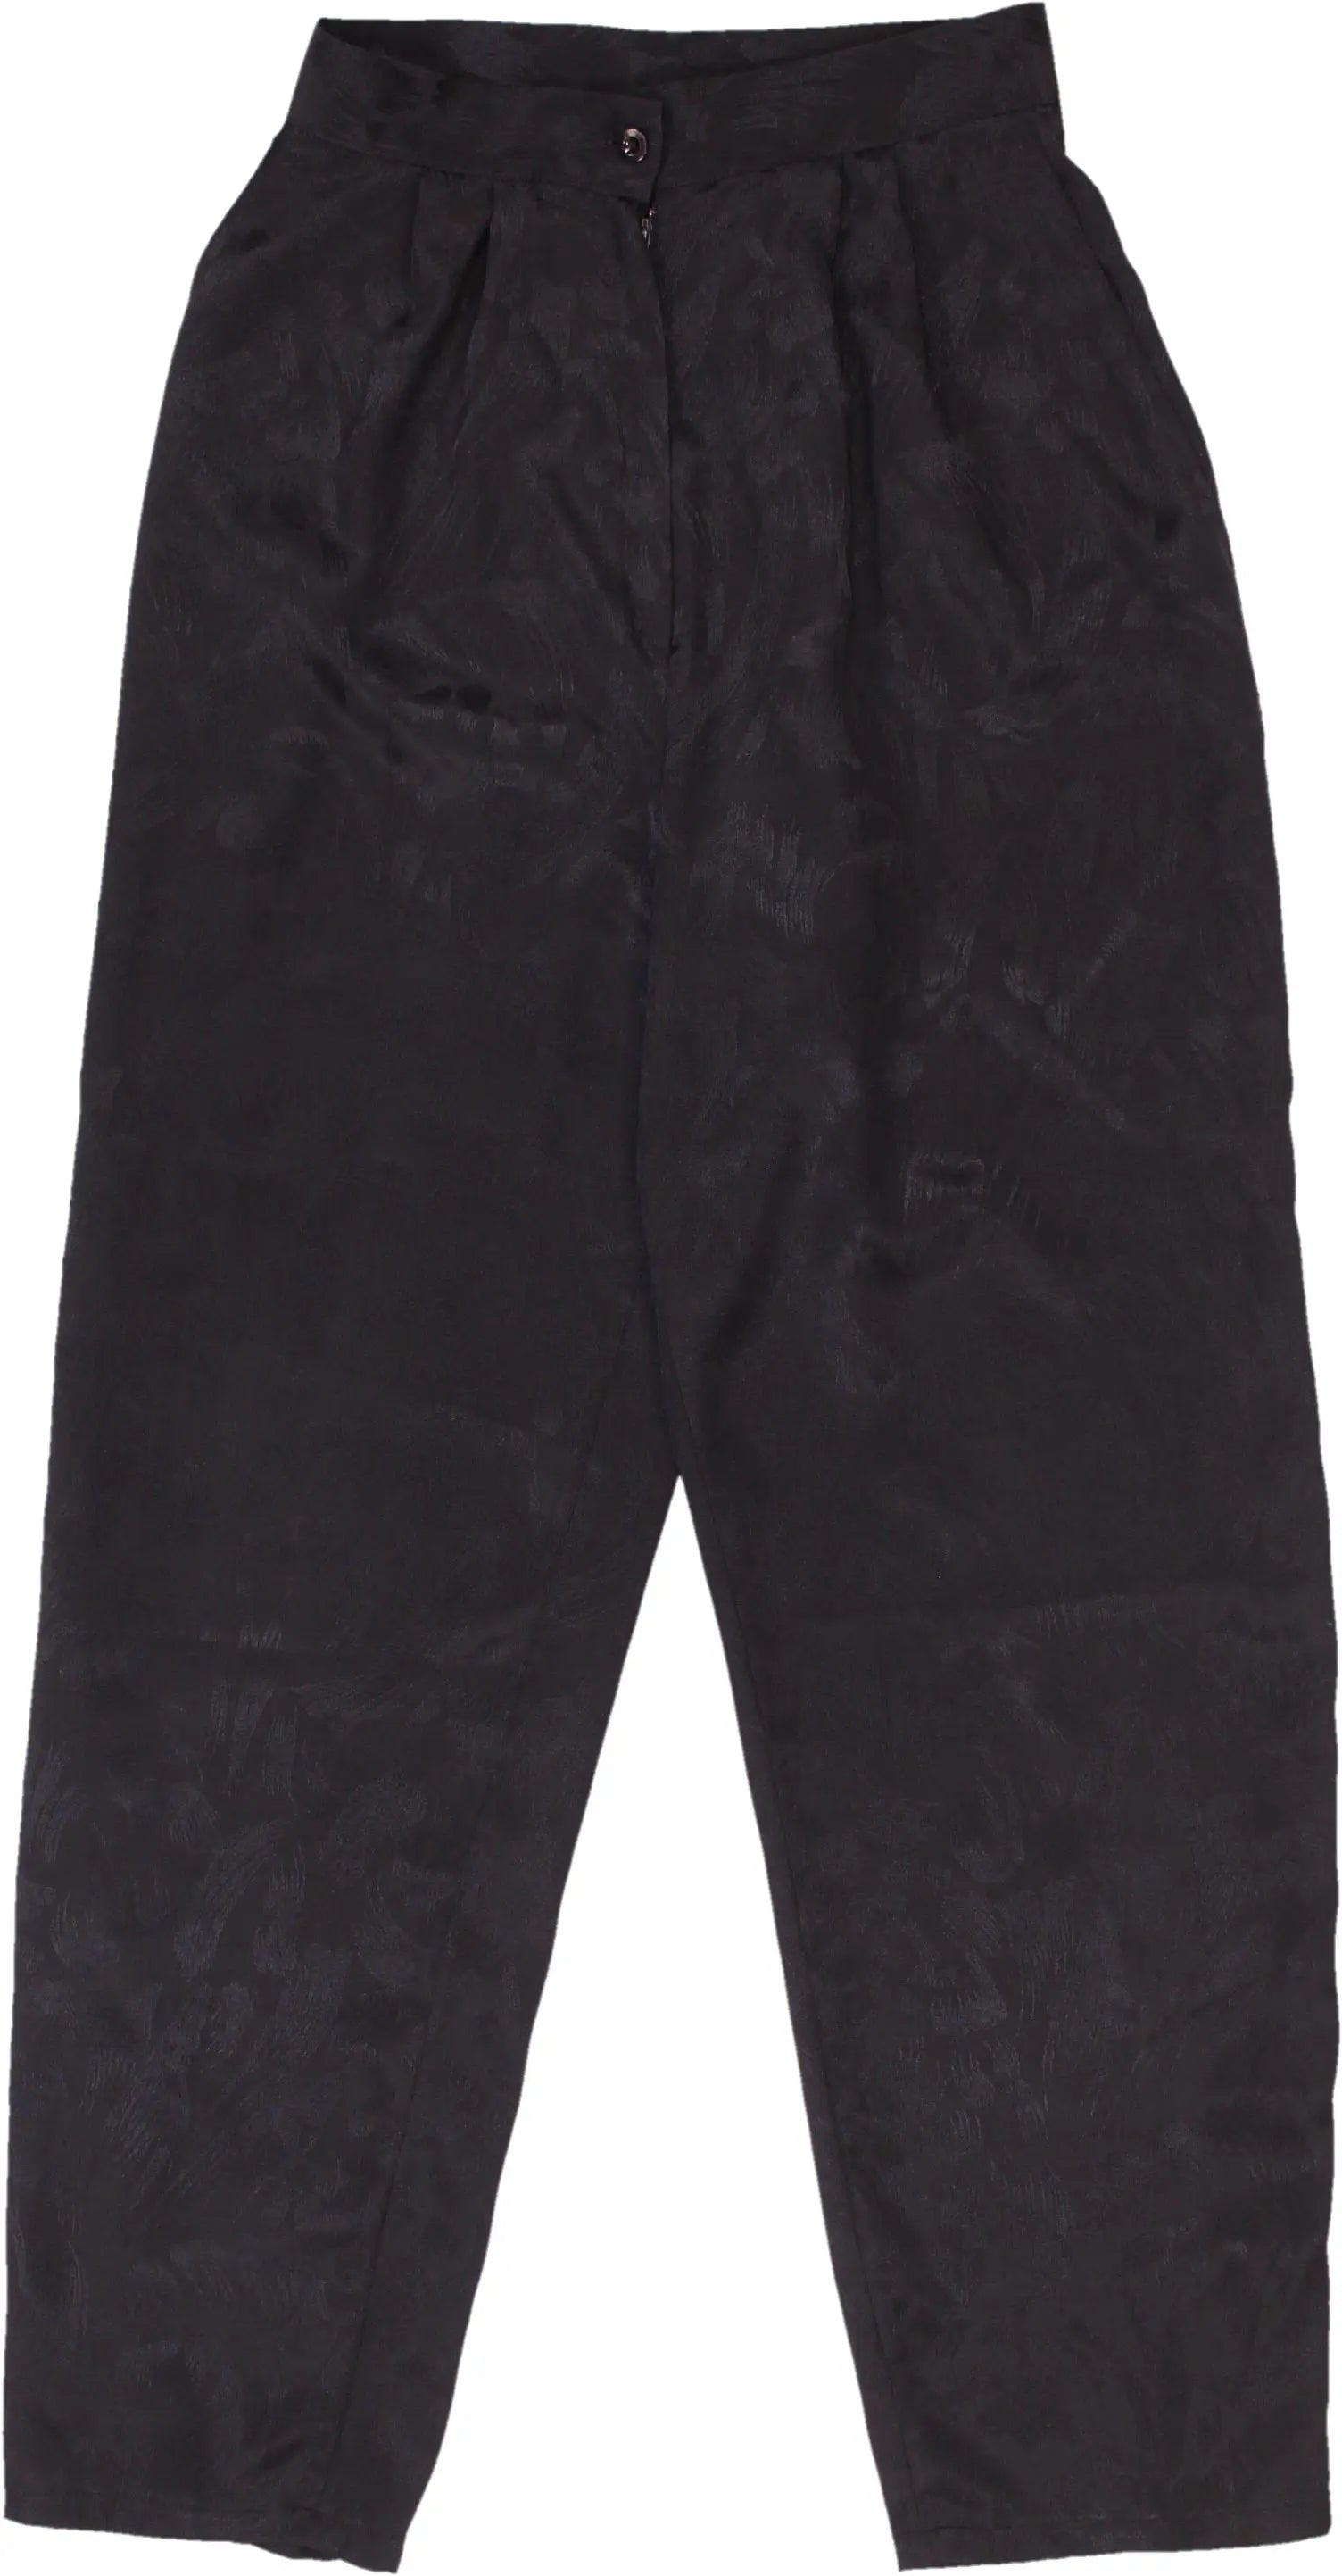 Spengler Mode - Black Satin Pants- ThriftTale.com - Vintage and second handclothing